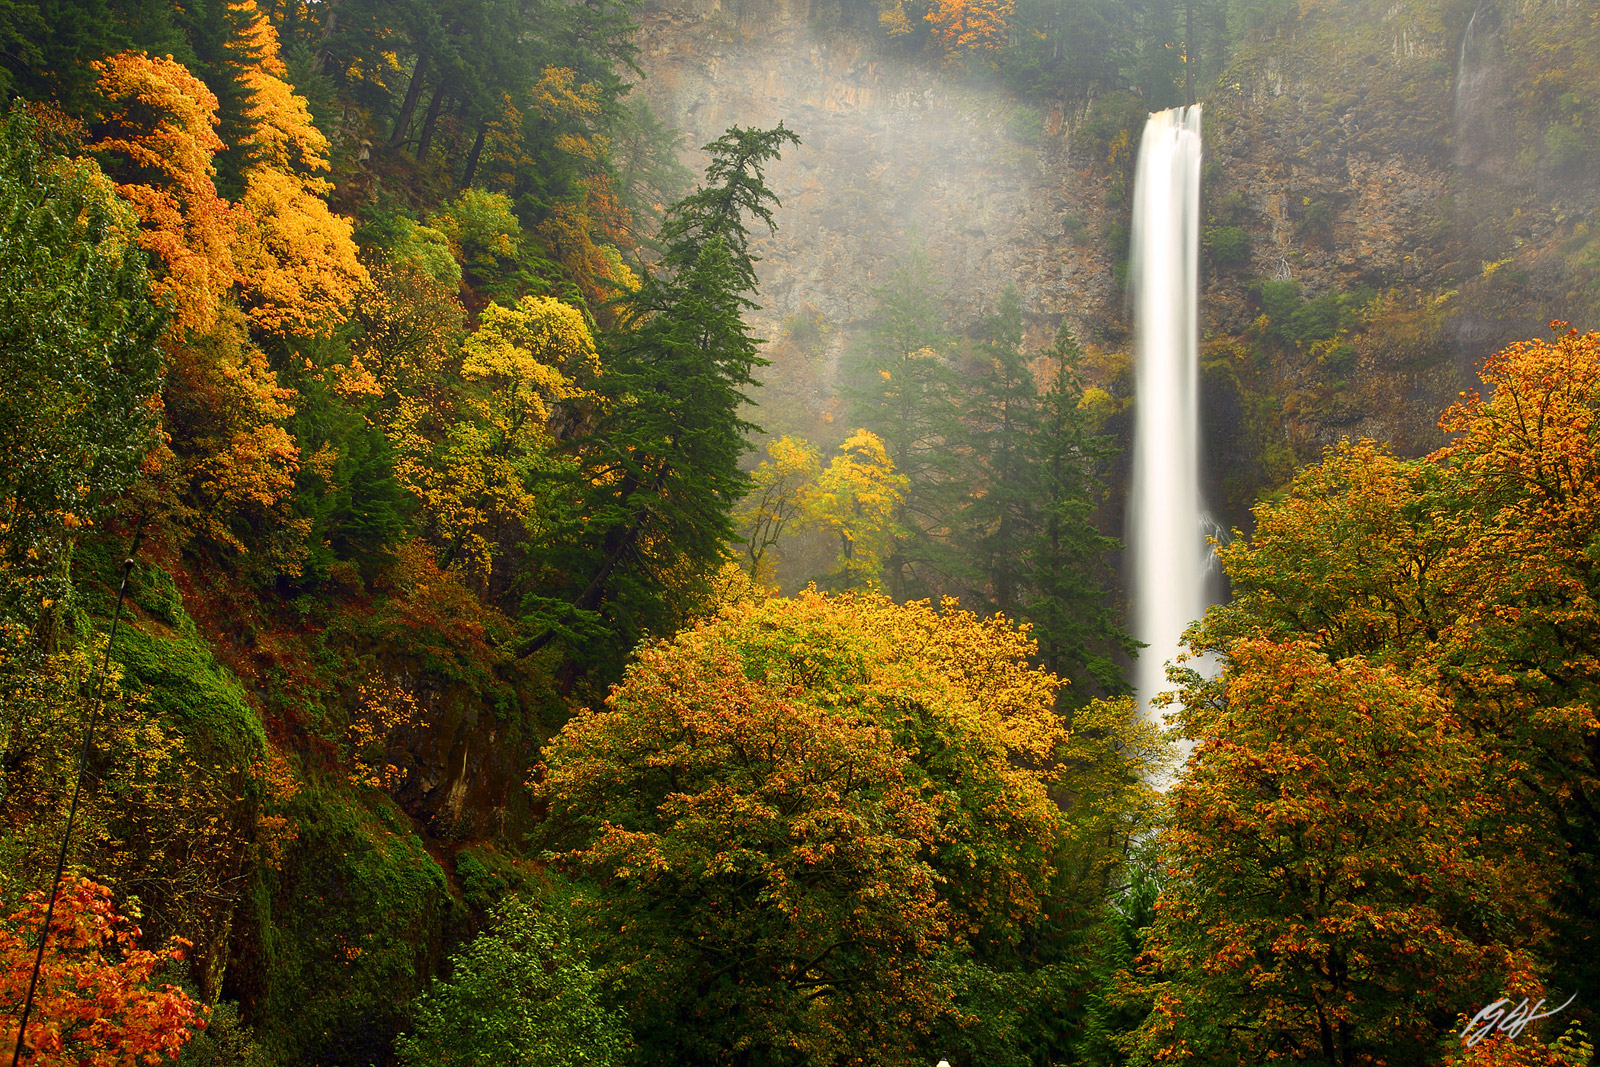 Multnomah Falls in the Columbia River Gorge National Scenic Area in Oregon